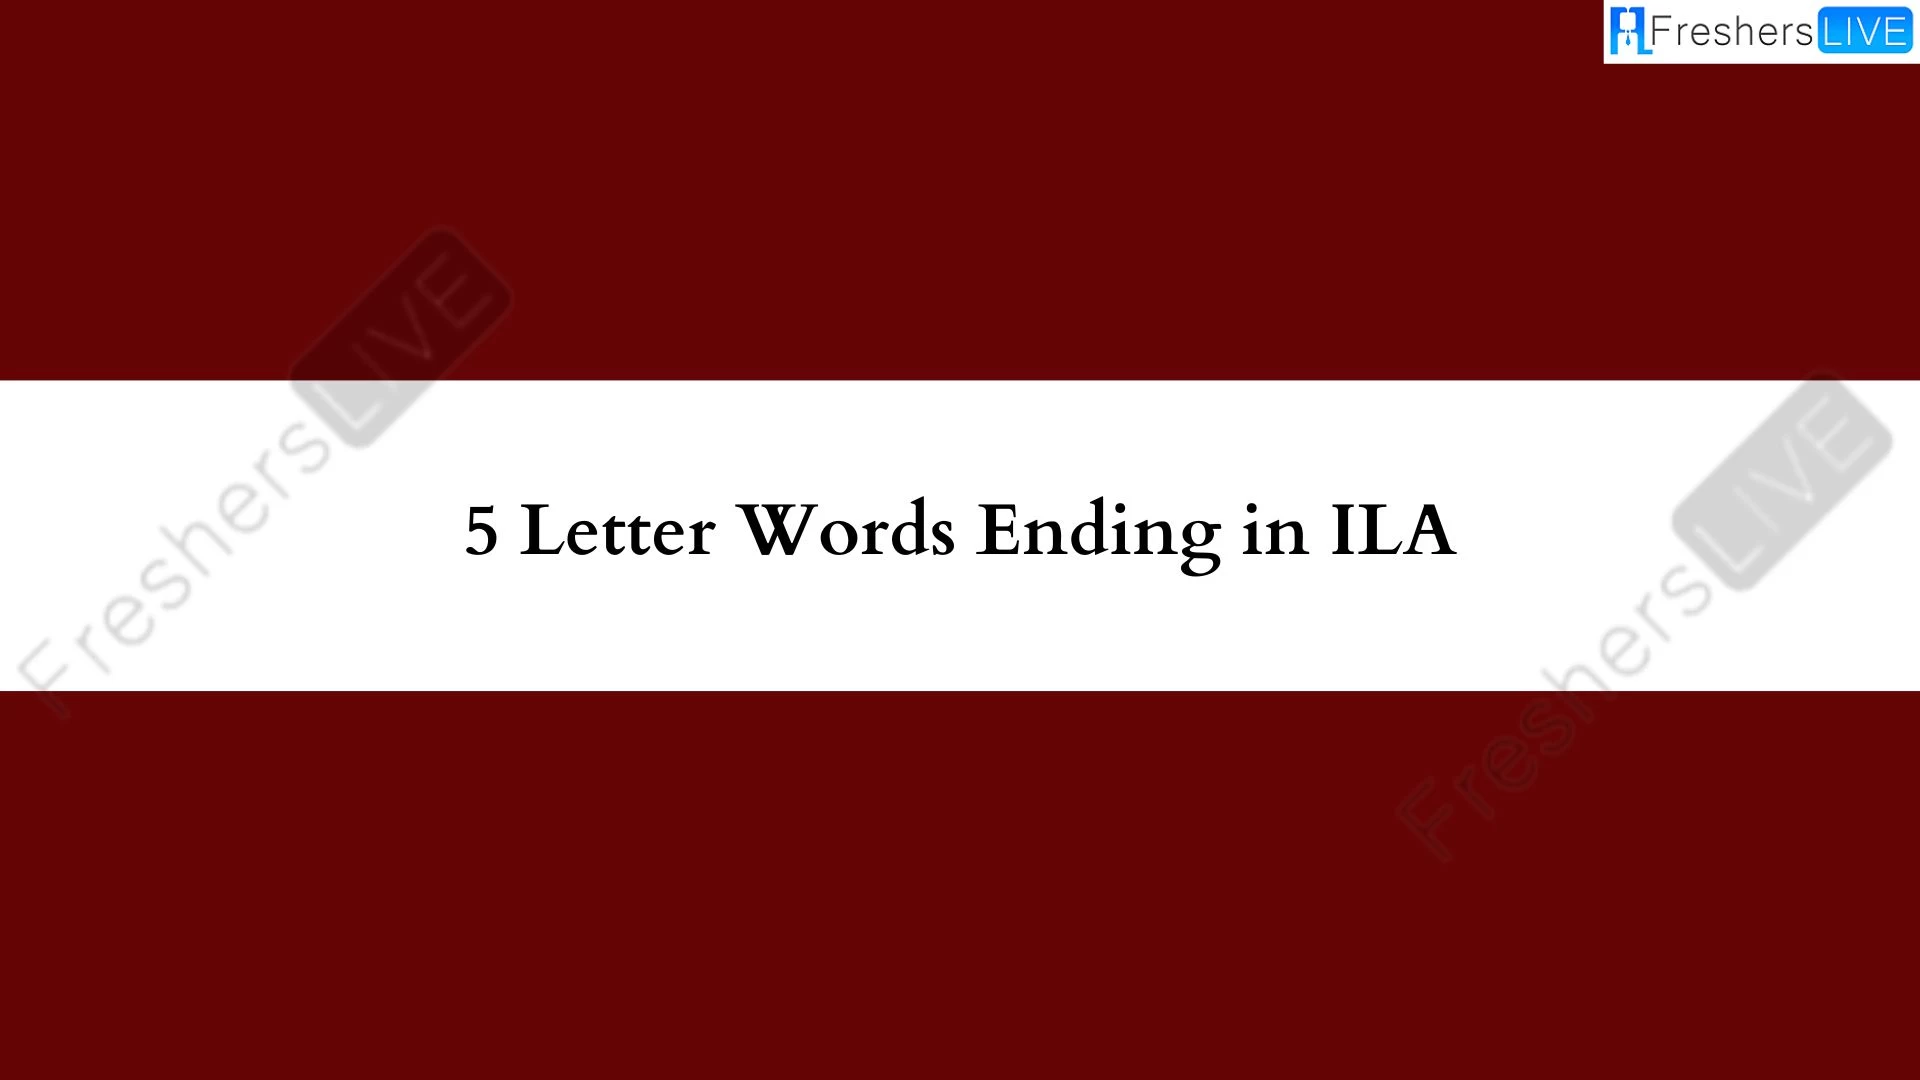 Lista de palabras de 5 letras que terminan en todas las palabras ILA